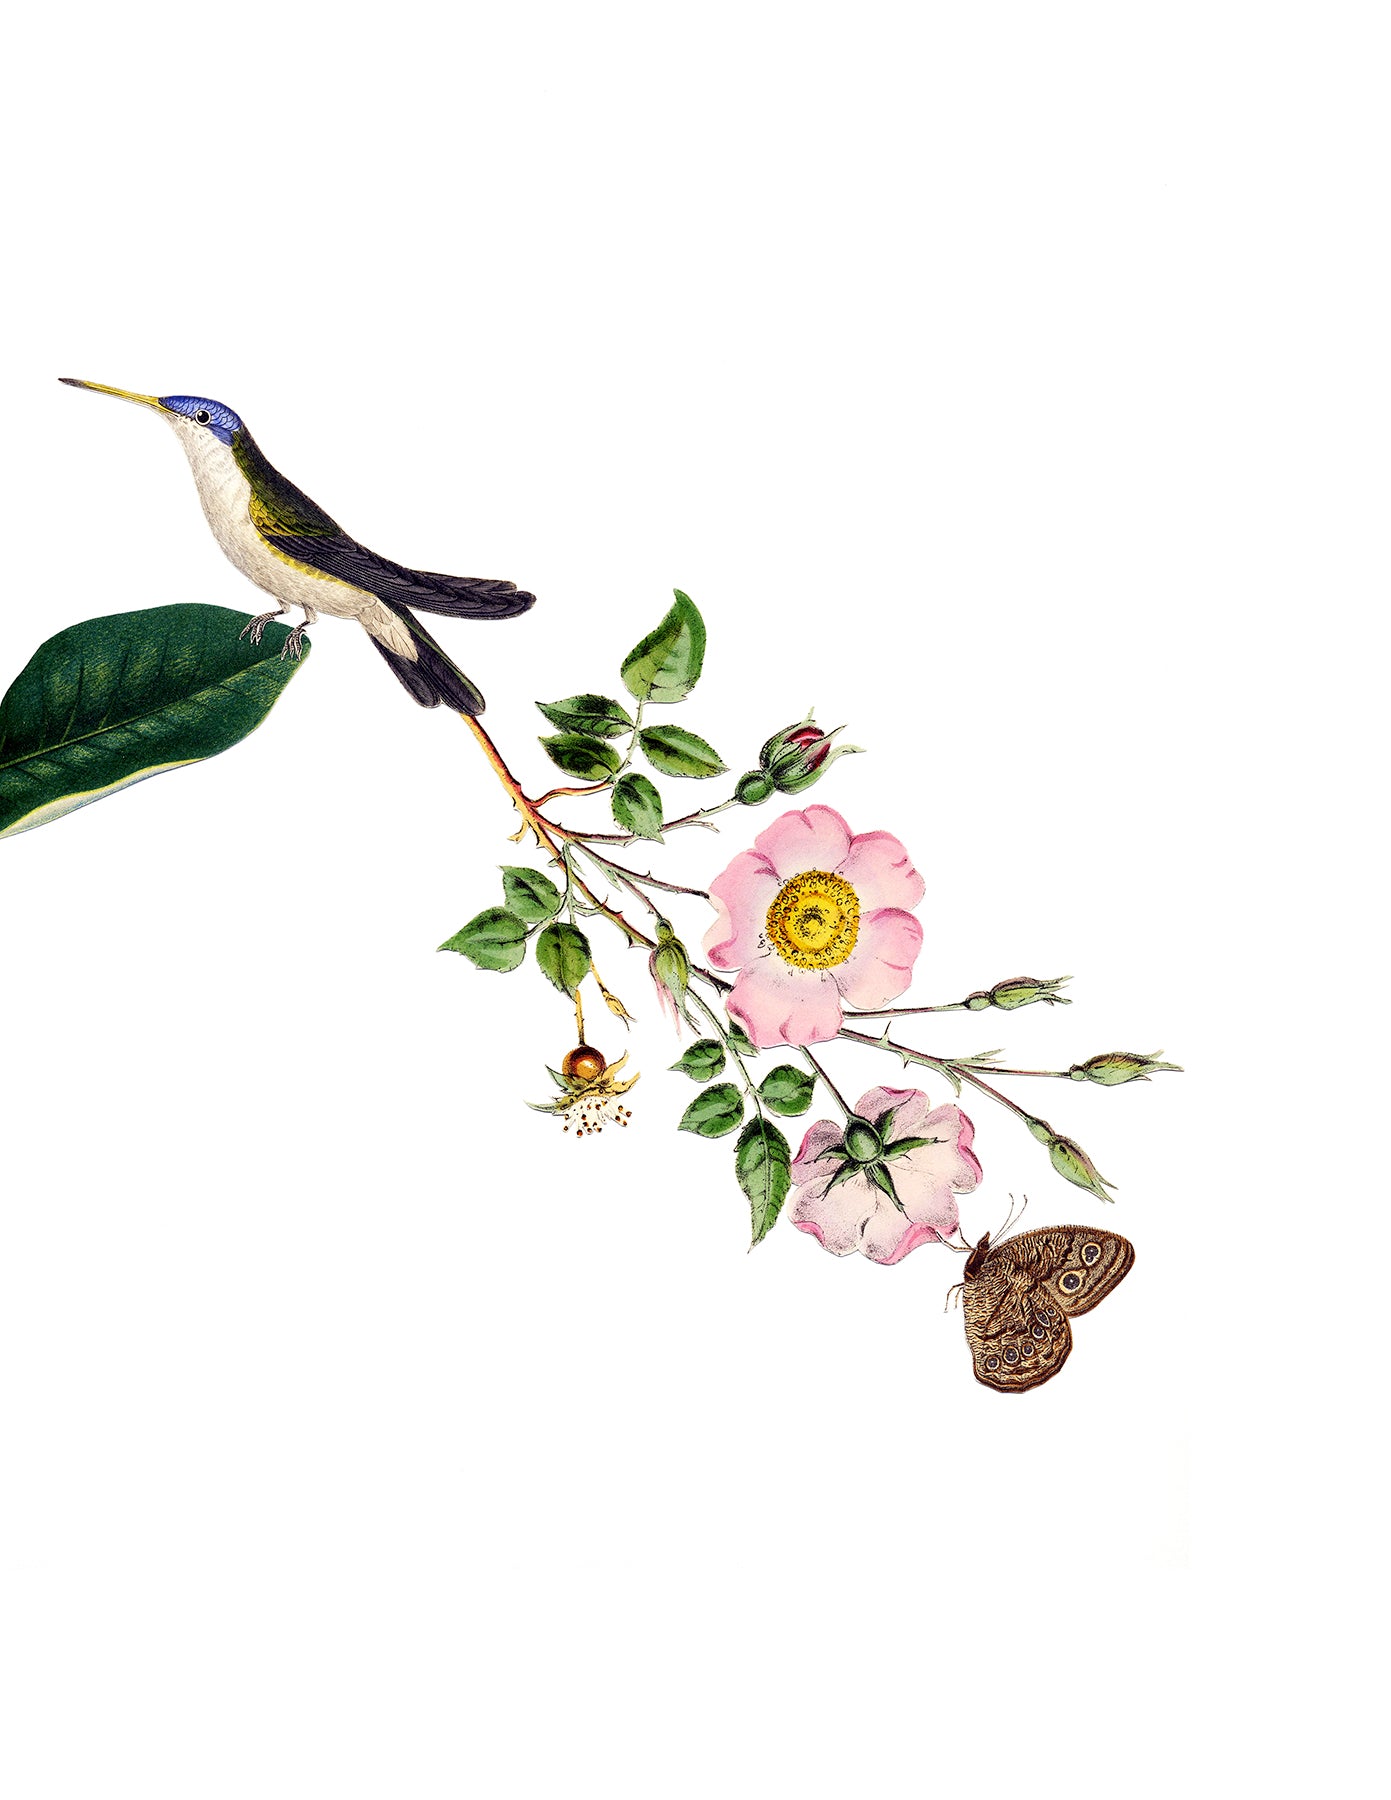 Bird of Paradise (Roses) print